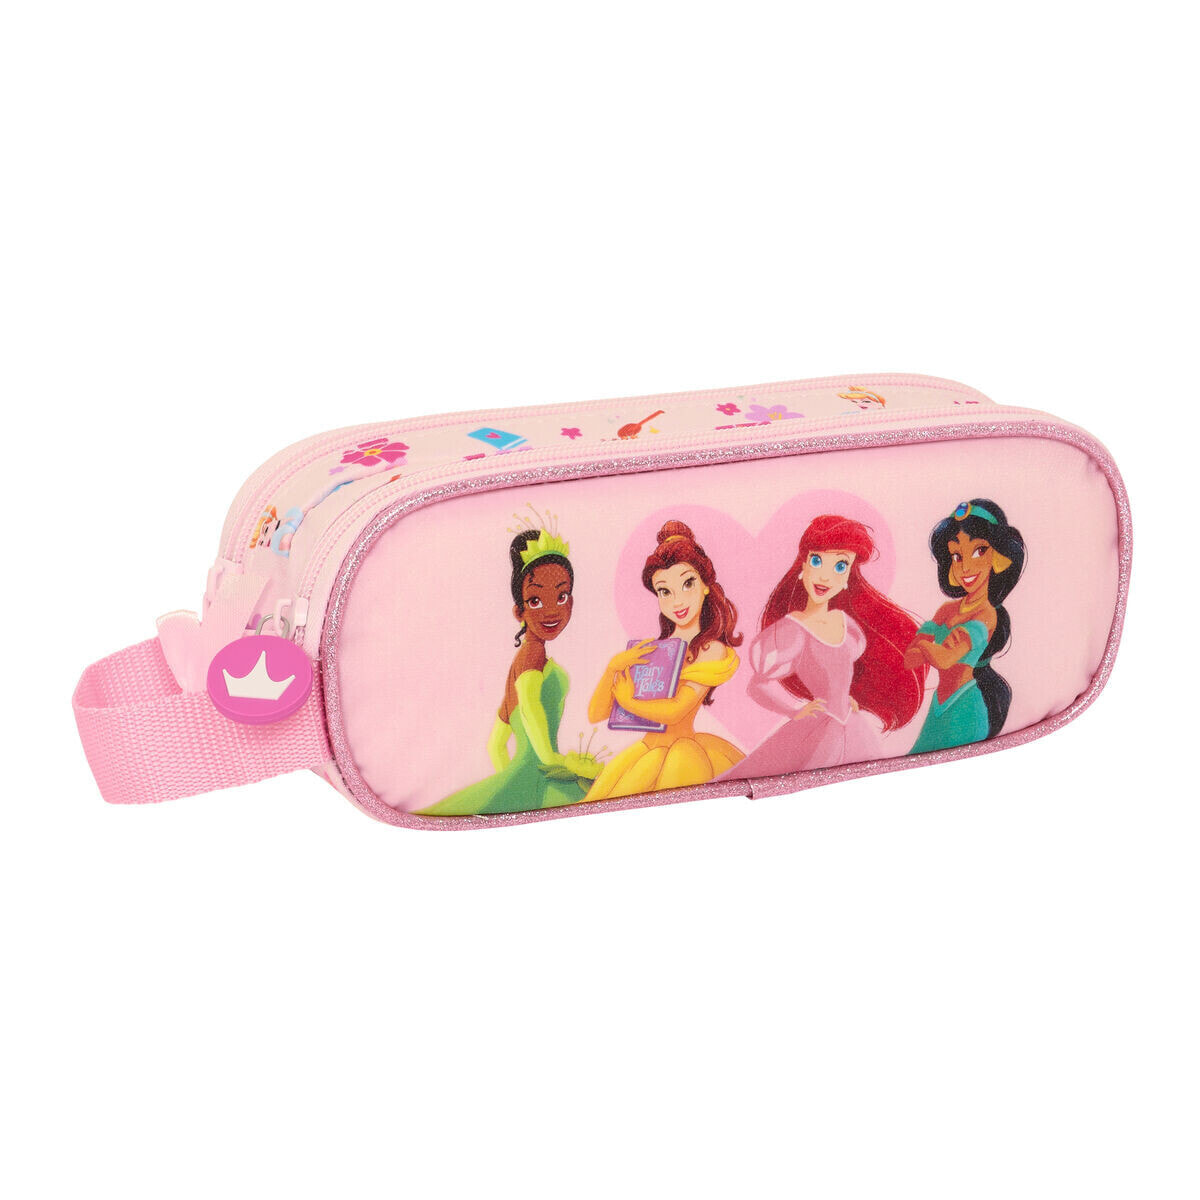 Double Carry-all Disney Princess Summer adventures Pink 21 x 8 x 6 cm